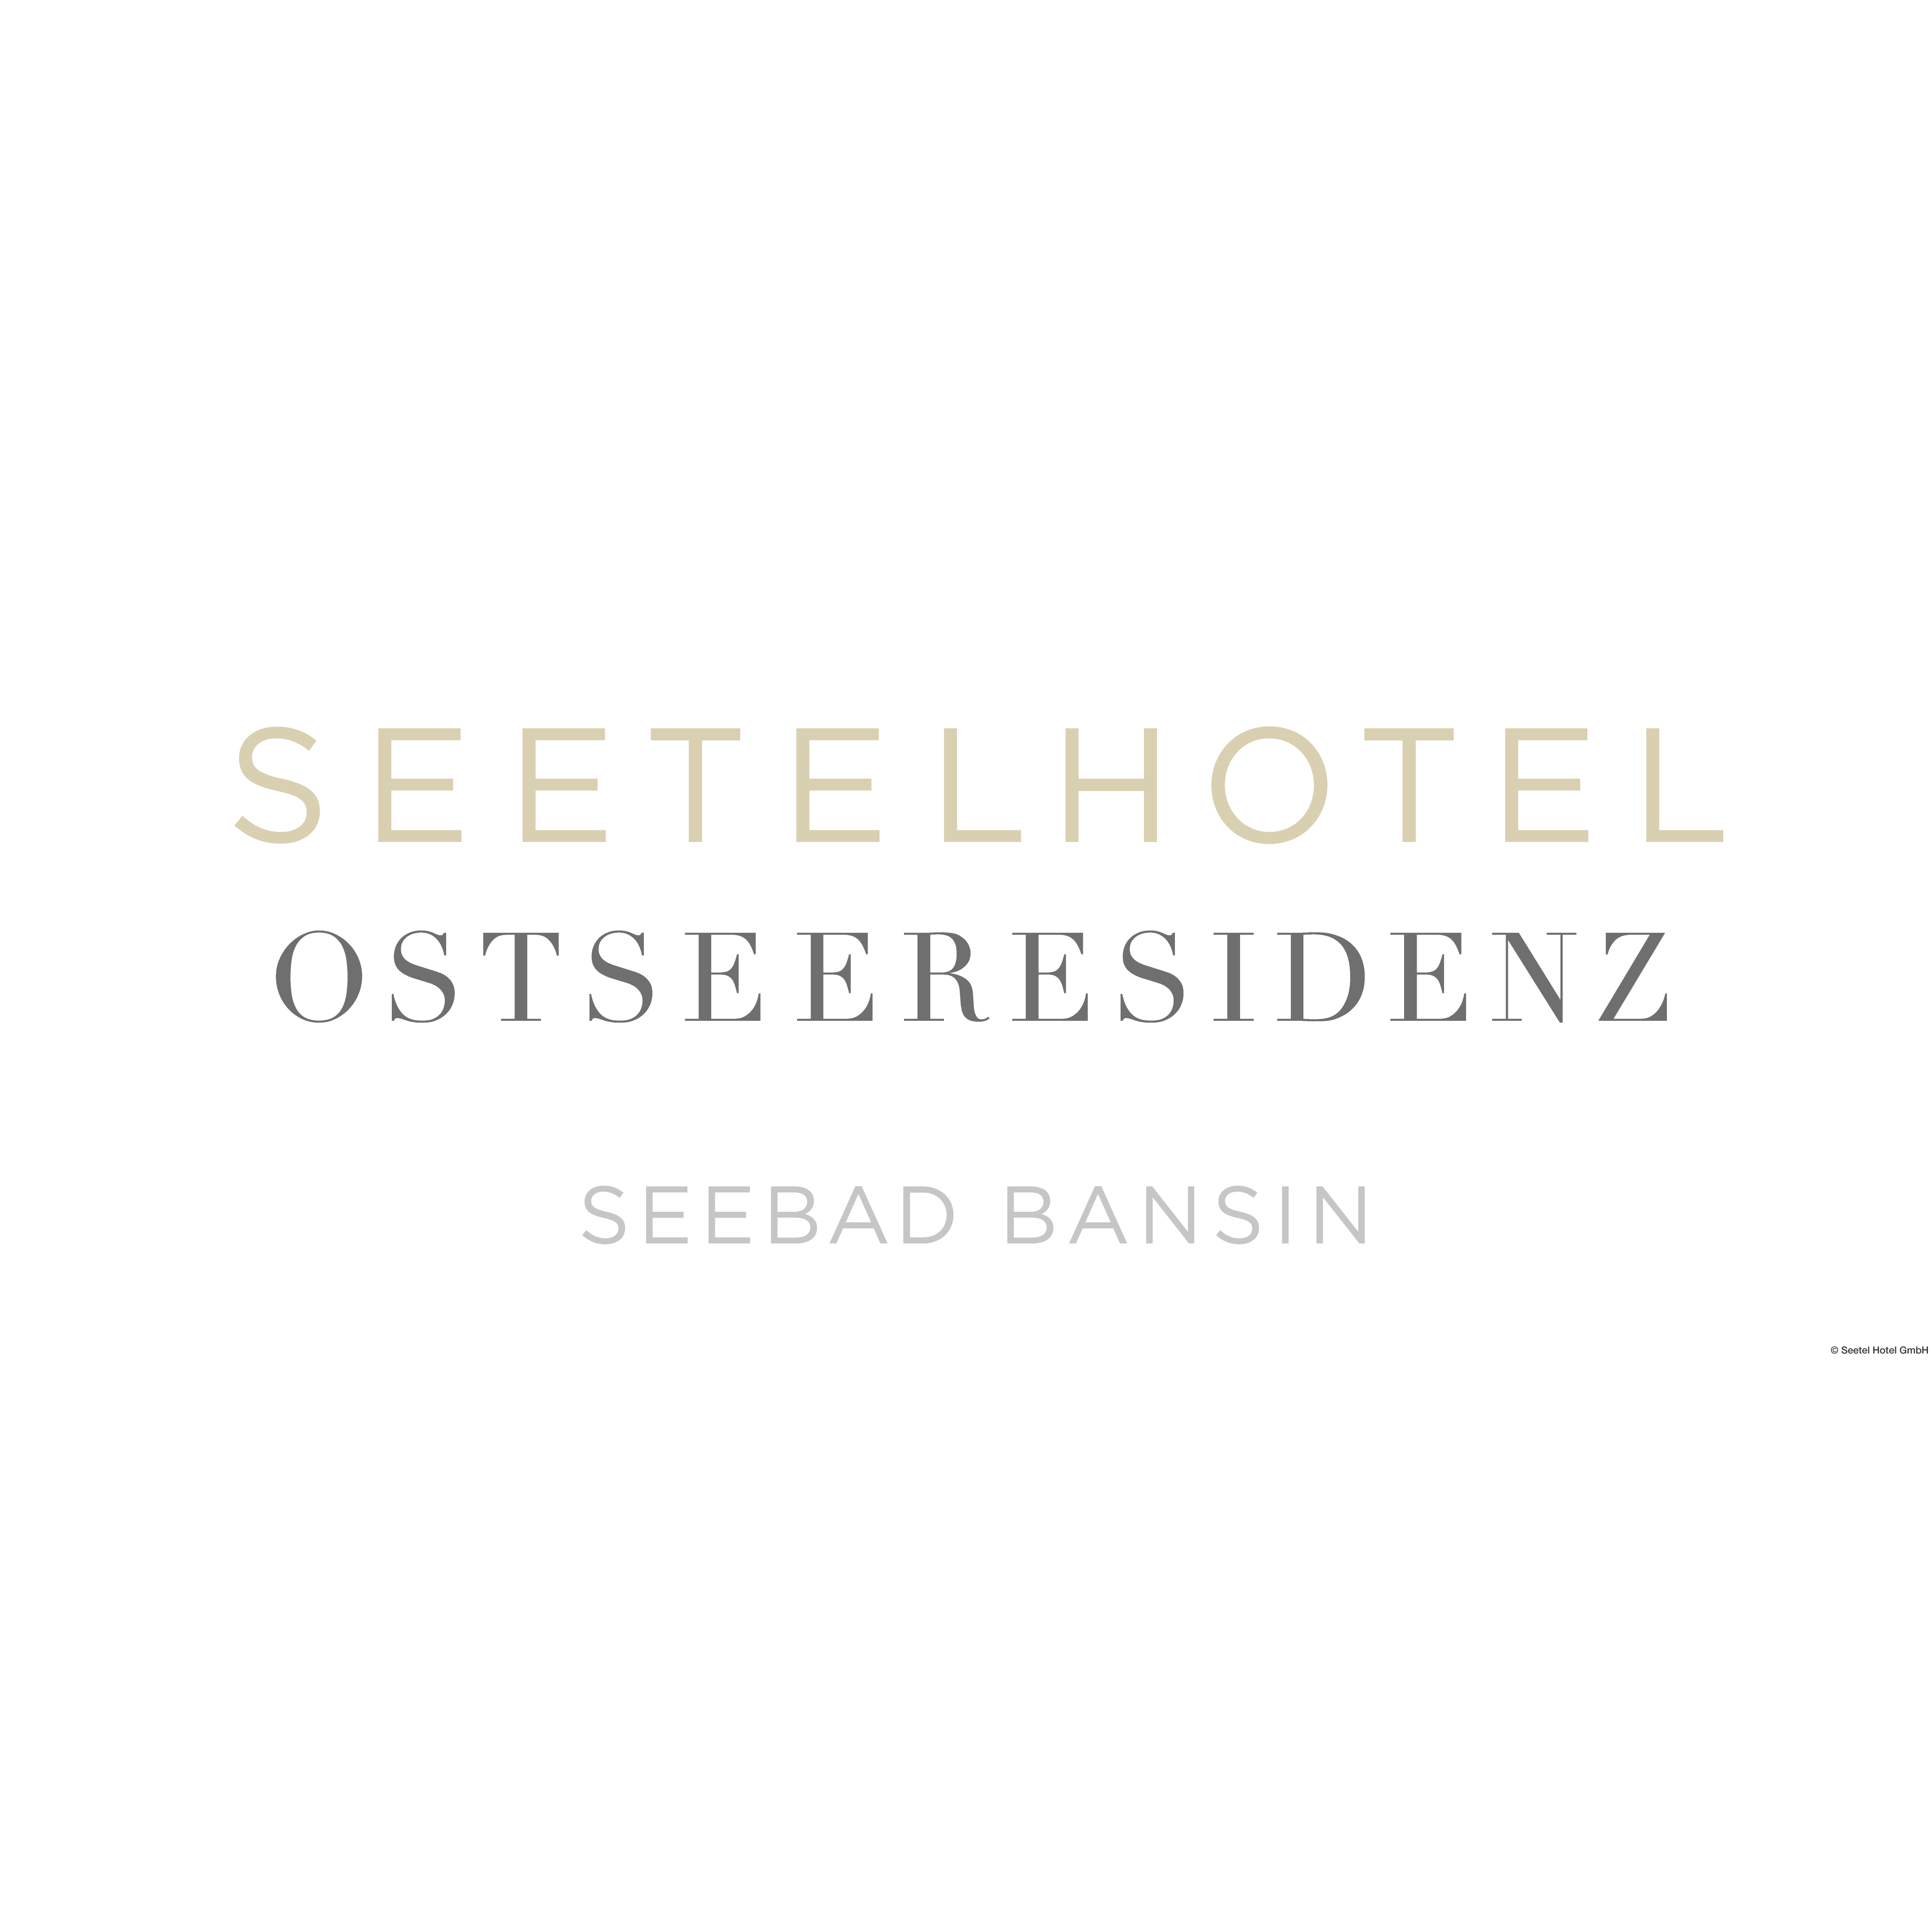 SEETELHOTEL Ostseeresidenz Bansin in Ostseebad Heringsdorf - Logo